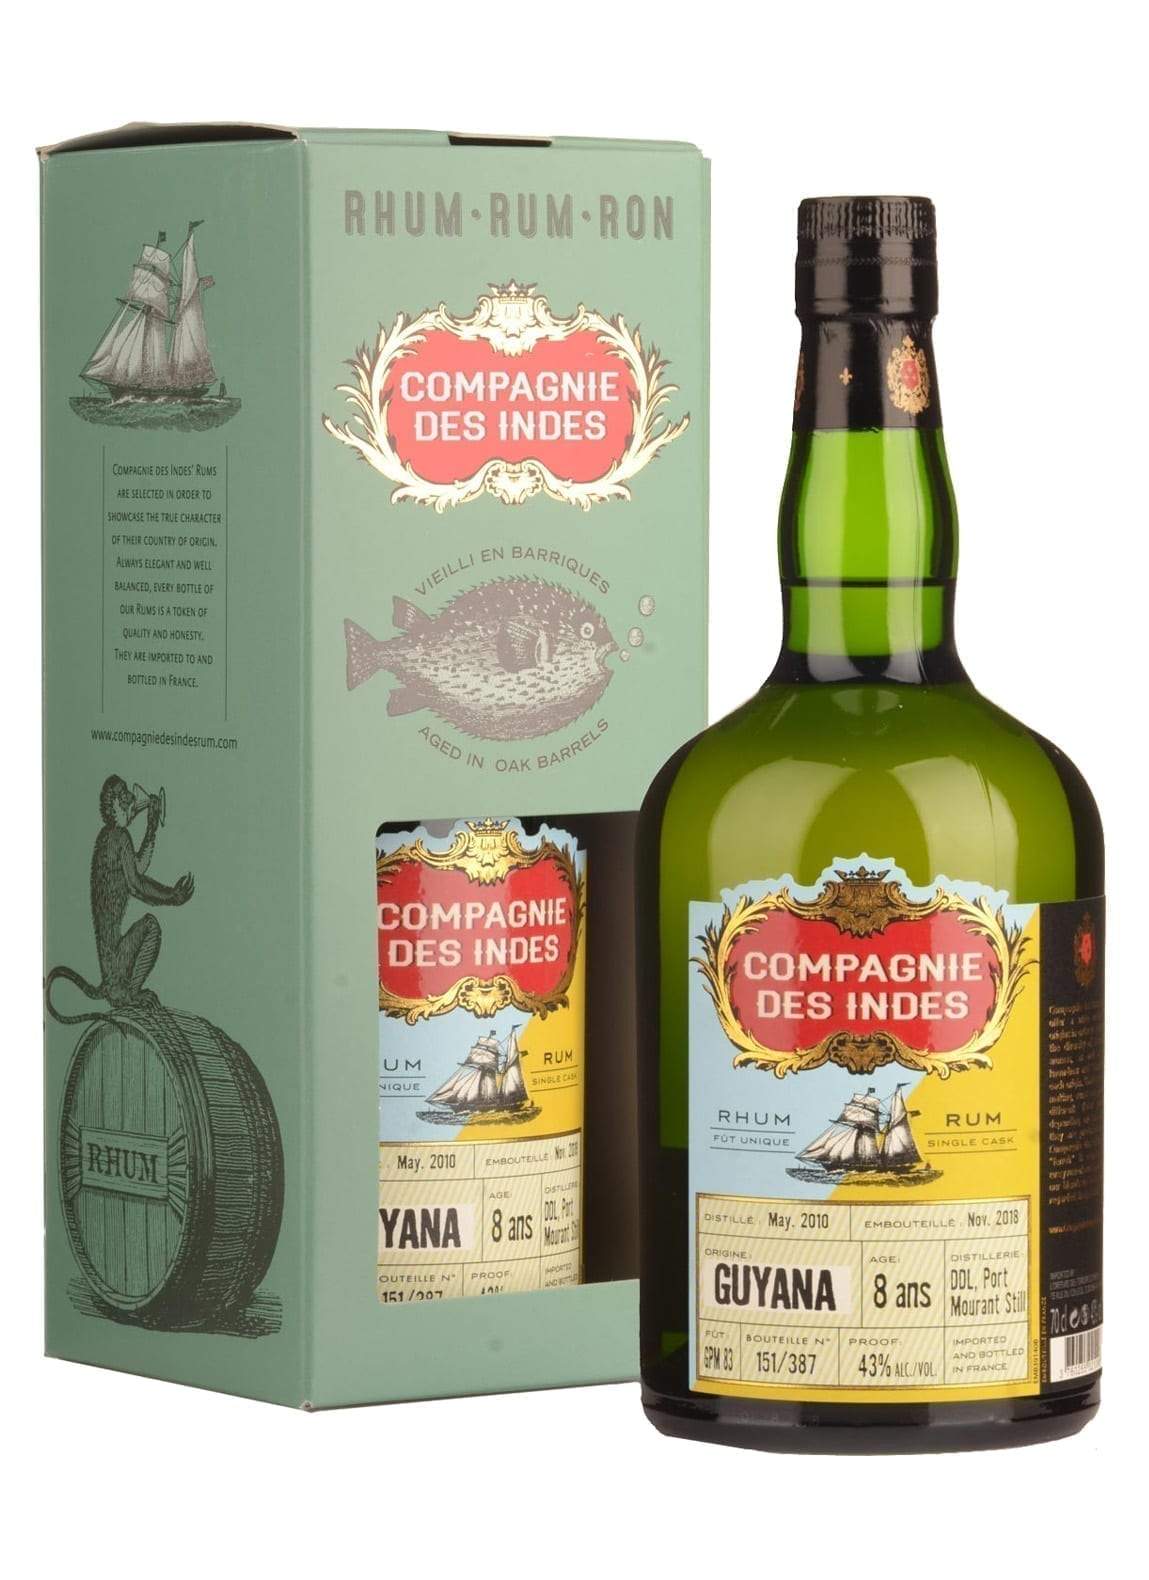 Compagnie des Indes Rum Guyana 8 years 43% 700ml | Rum | Shop online at Spirits of France